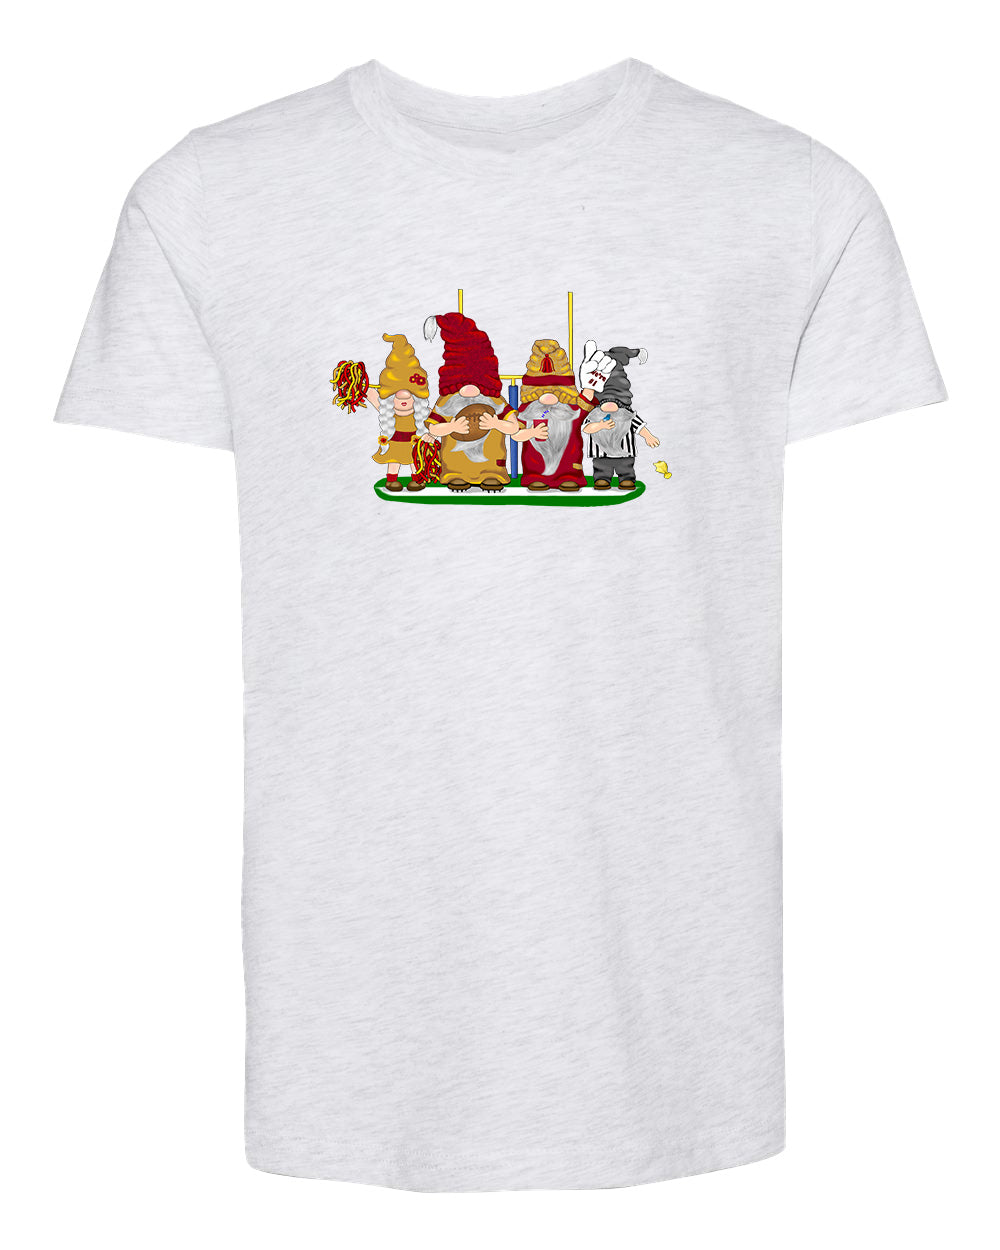 Burgundy & Gold Football Gnomes  (similar to DC) on Kids T-shirt